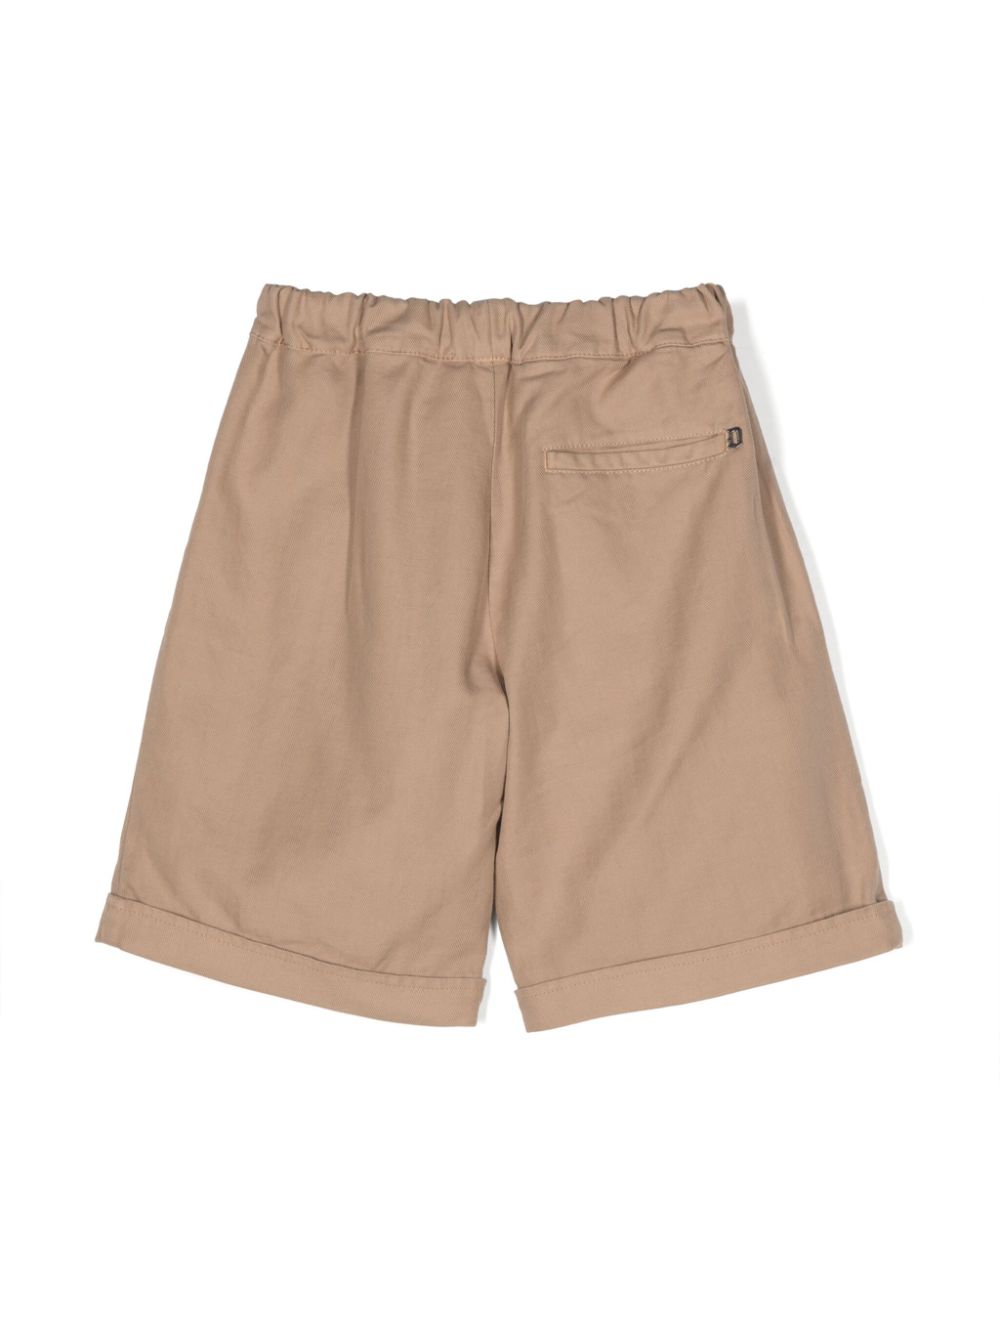 DONDUP KIDS herringbone bermuda shorts - Beige